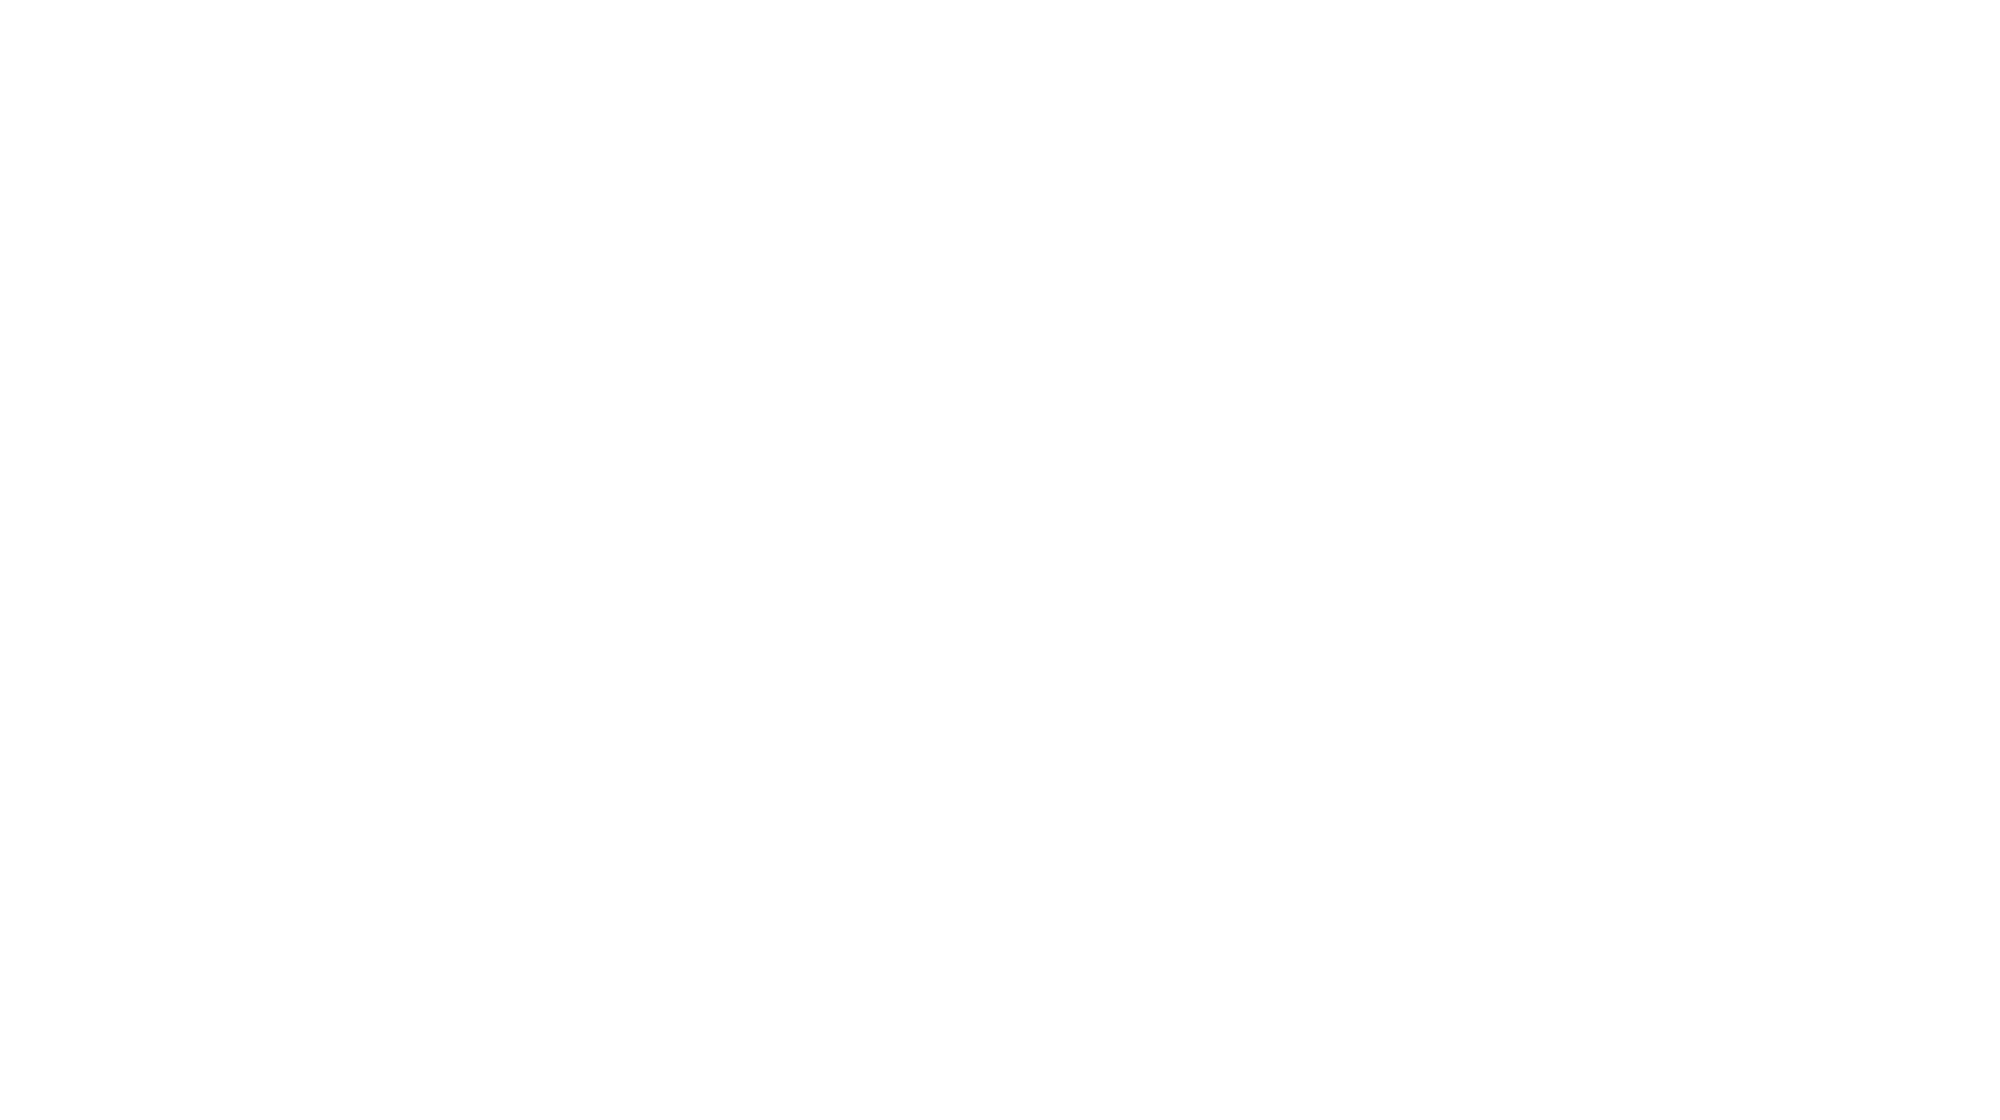 Bongo & B Entertainment